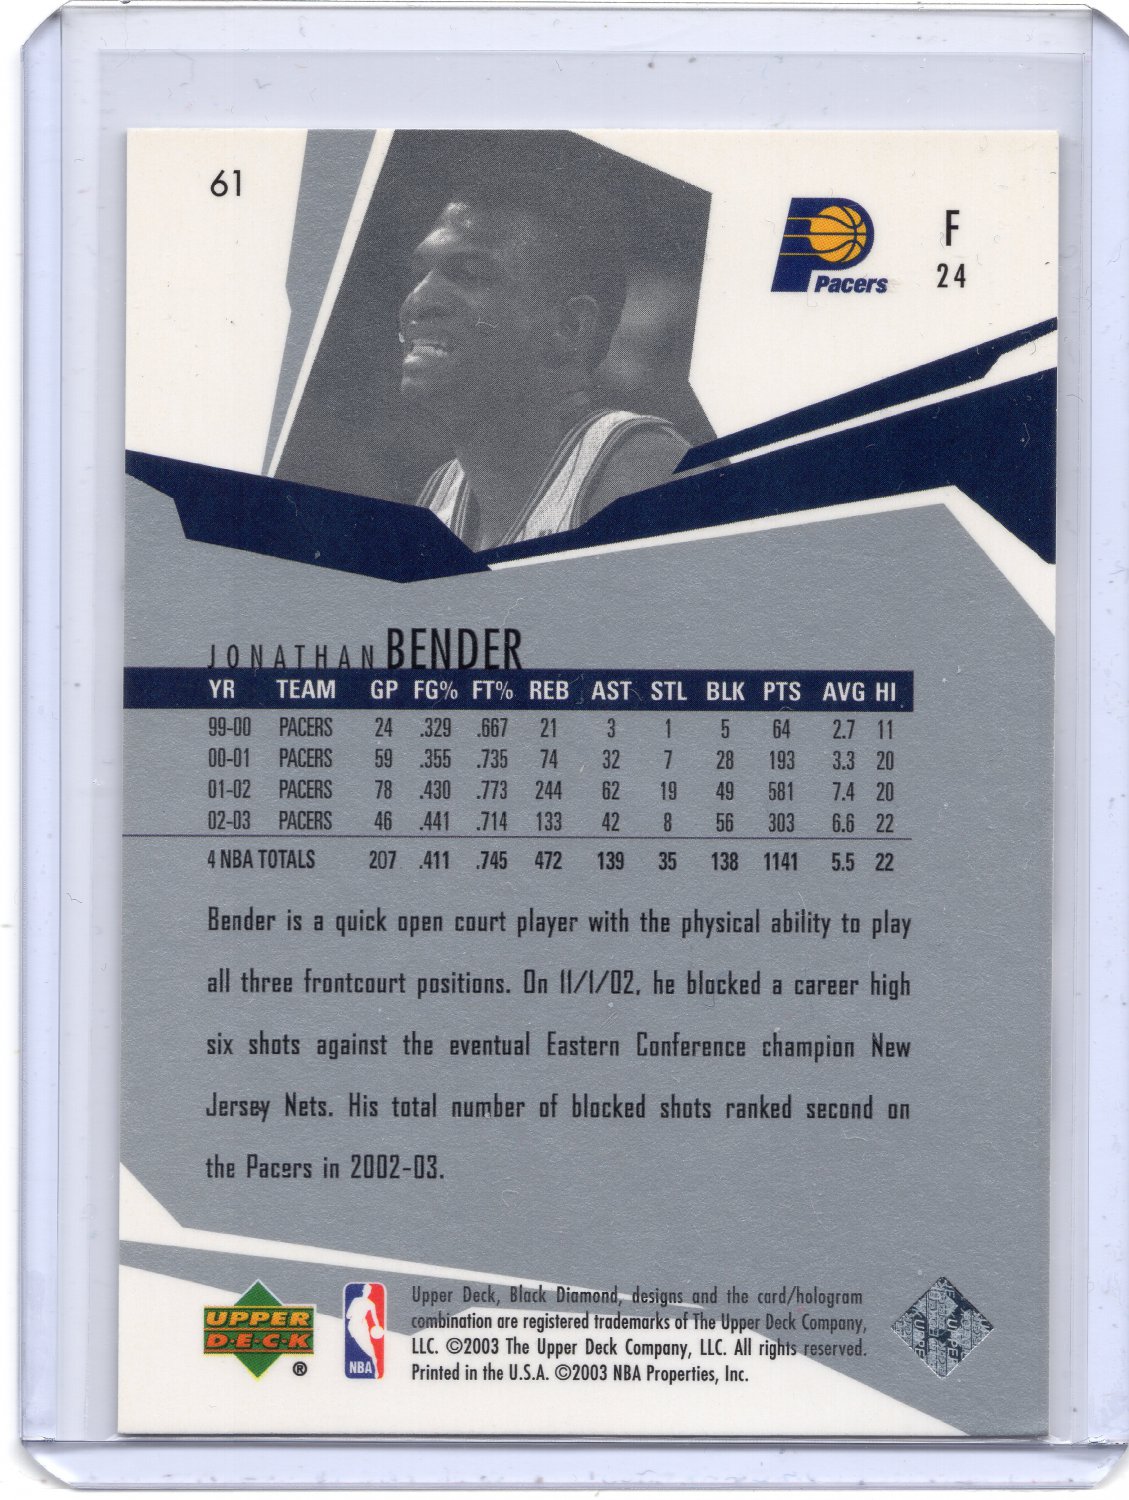 Jonathan Bender 2003-04 Upper Deck Black Diamond card #61 Indiana Pacers